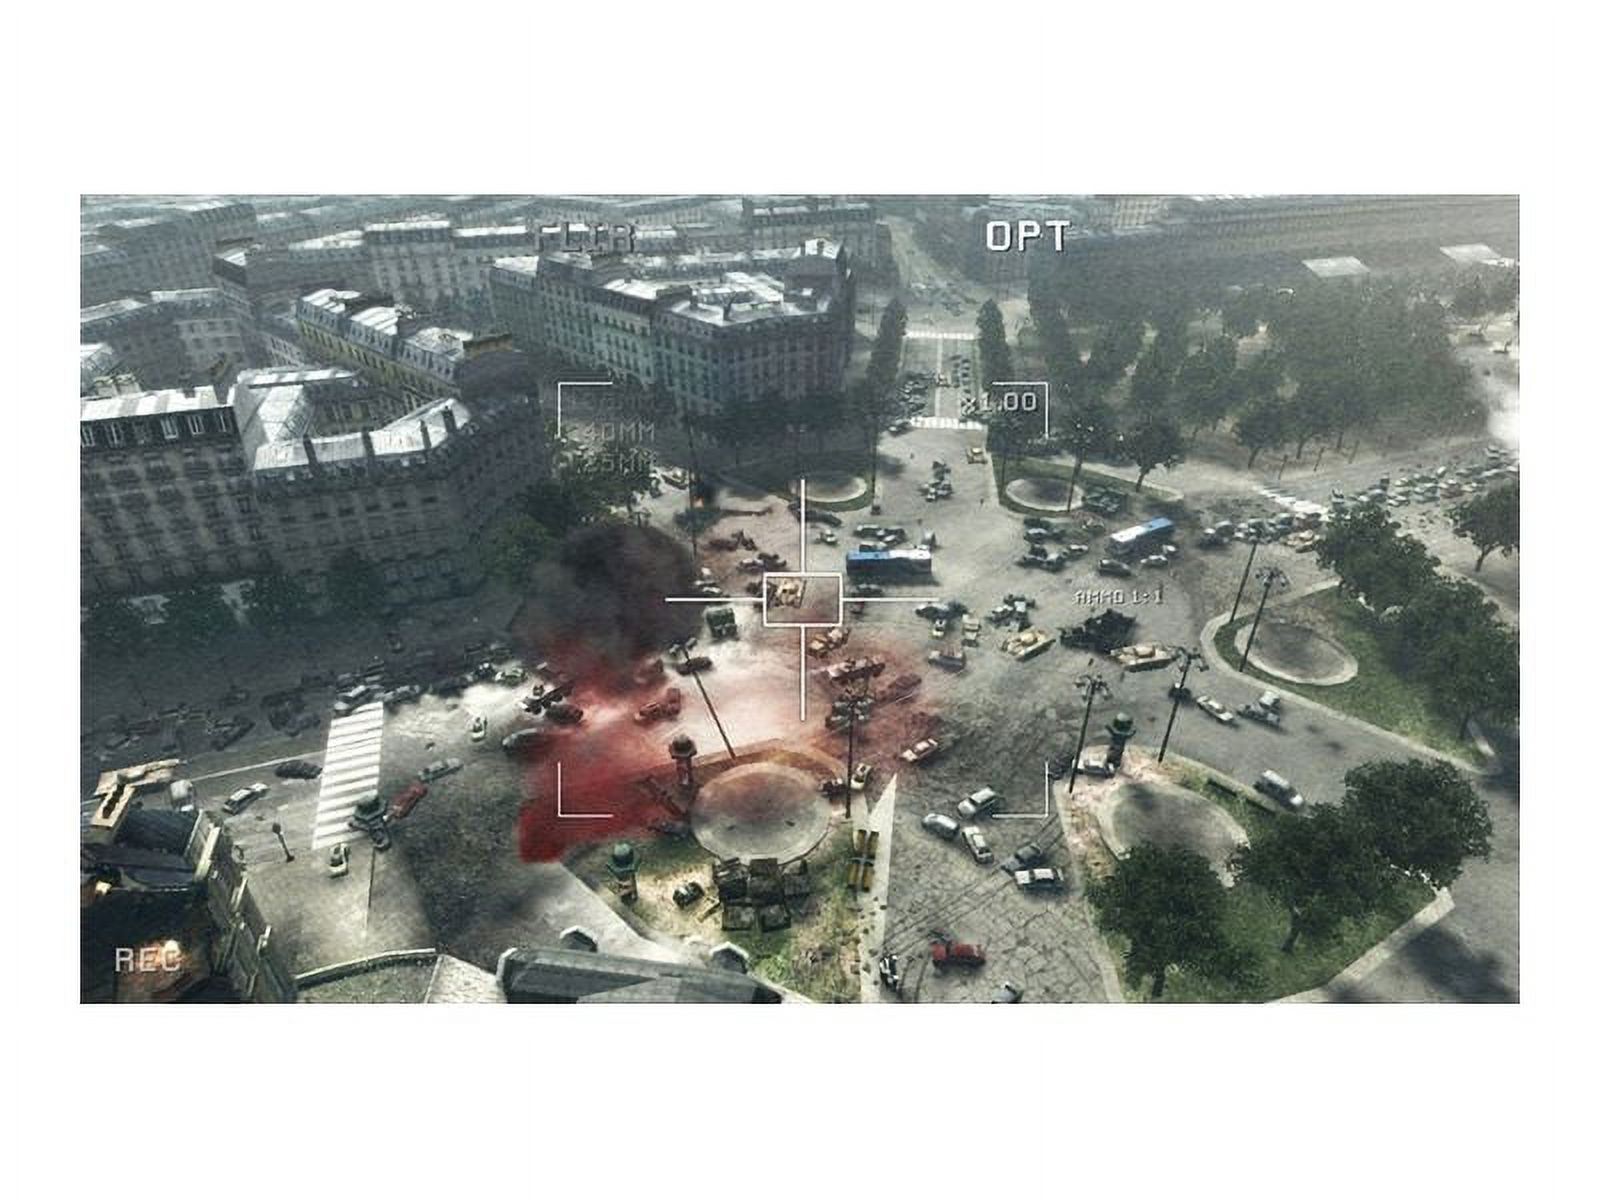 Call of Duty: Modern Warfare 3 (Wii) - image 5 of 15